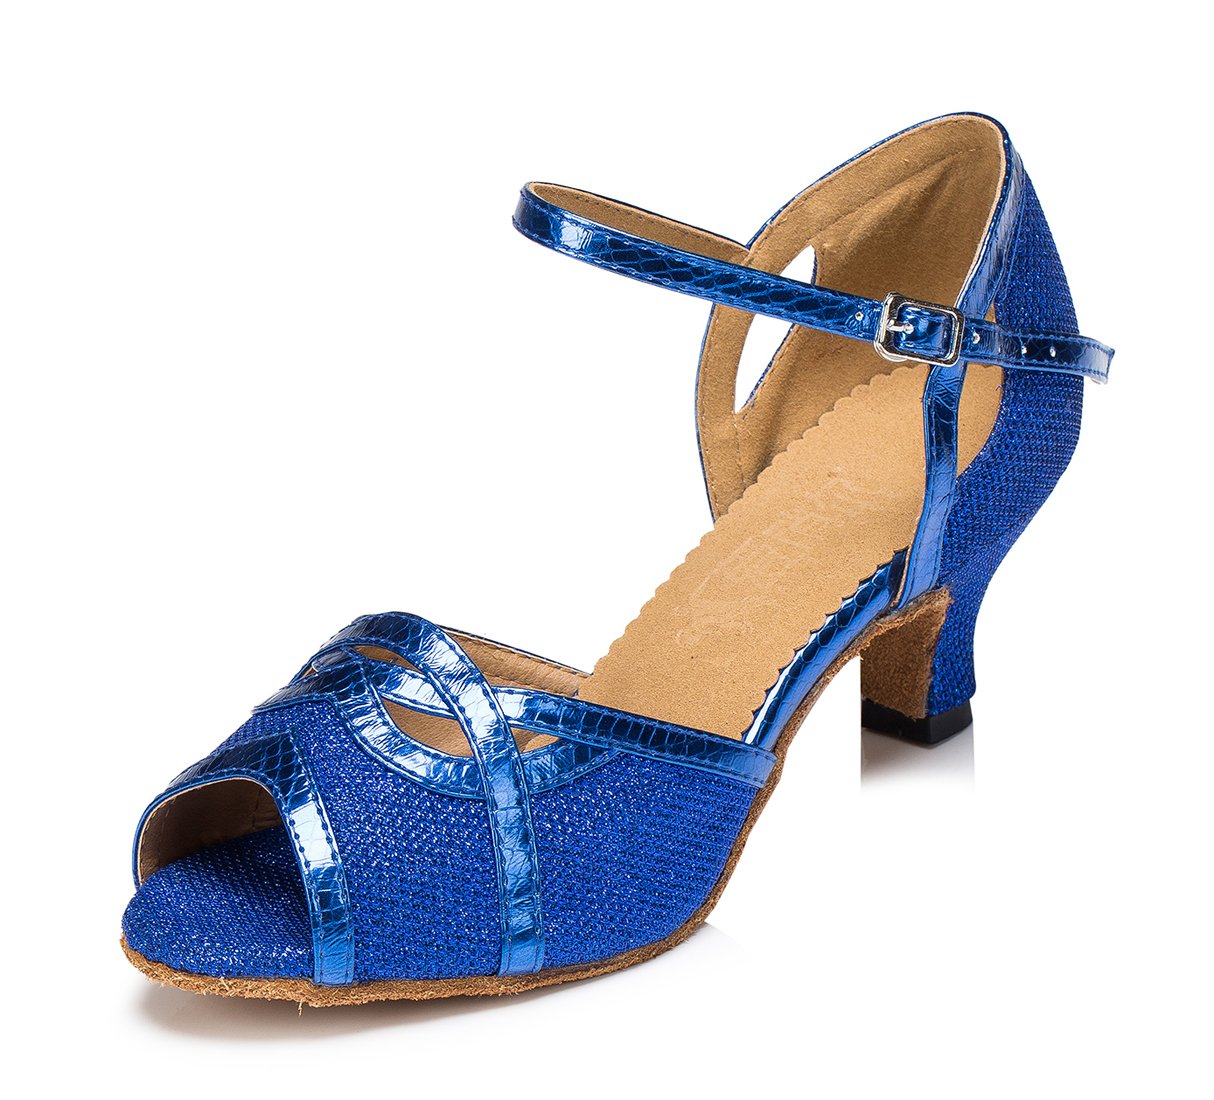 URVIP Neuheiten Frauen's Glitter Leder Heels Absatzschuhe Moderne Latein-Schuhe mit Knöchelriemen Tanzschuhe LD059 Blau 36 EU